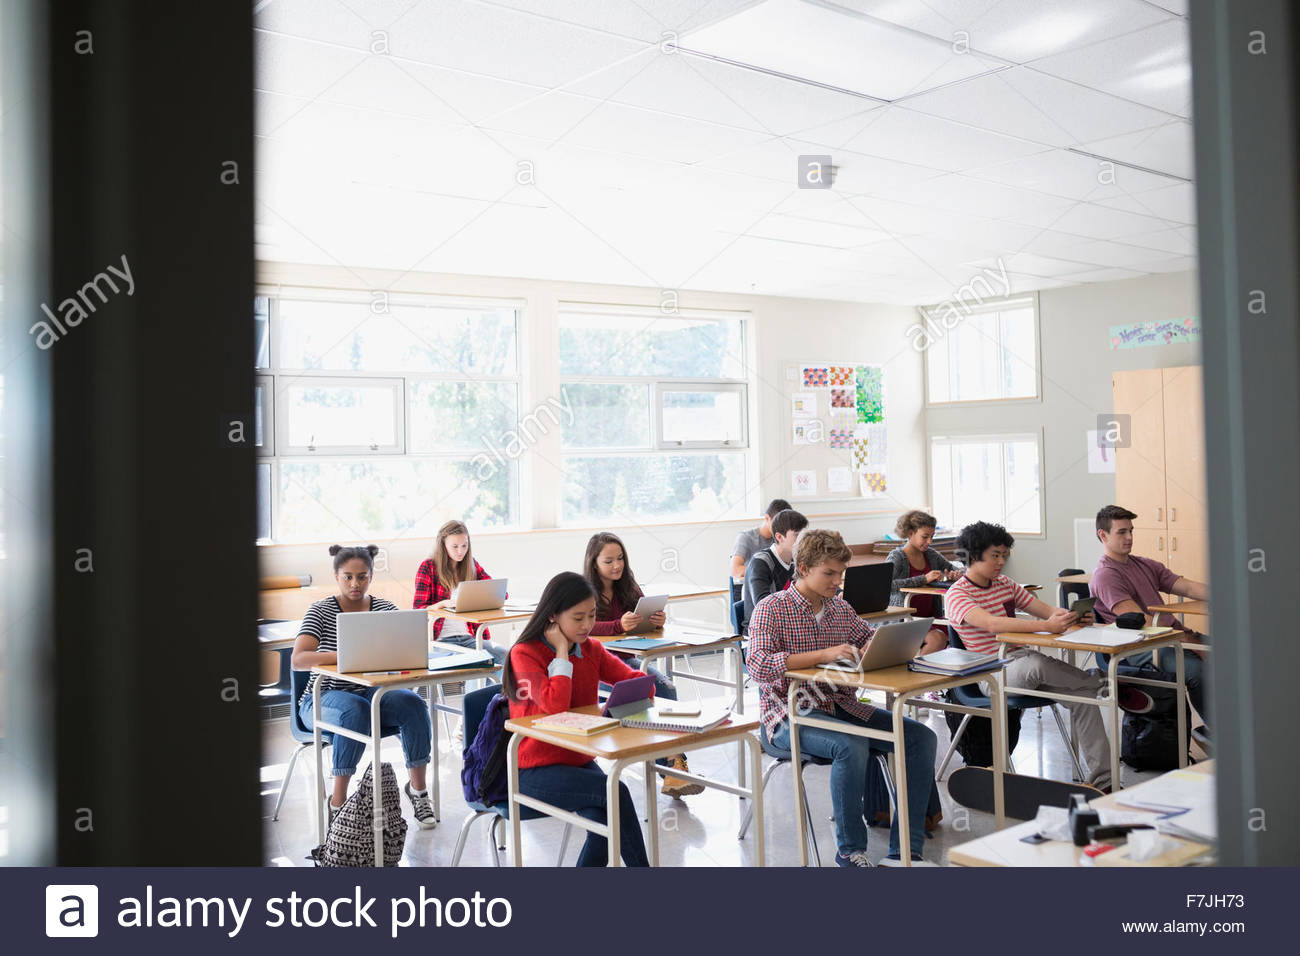 High school students laptops and digital tablets desks Stock Photo